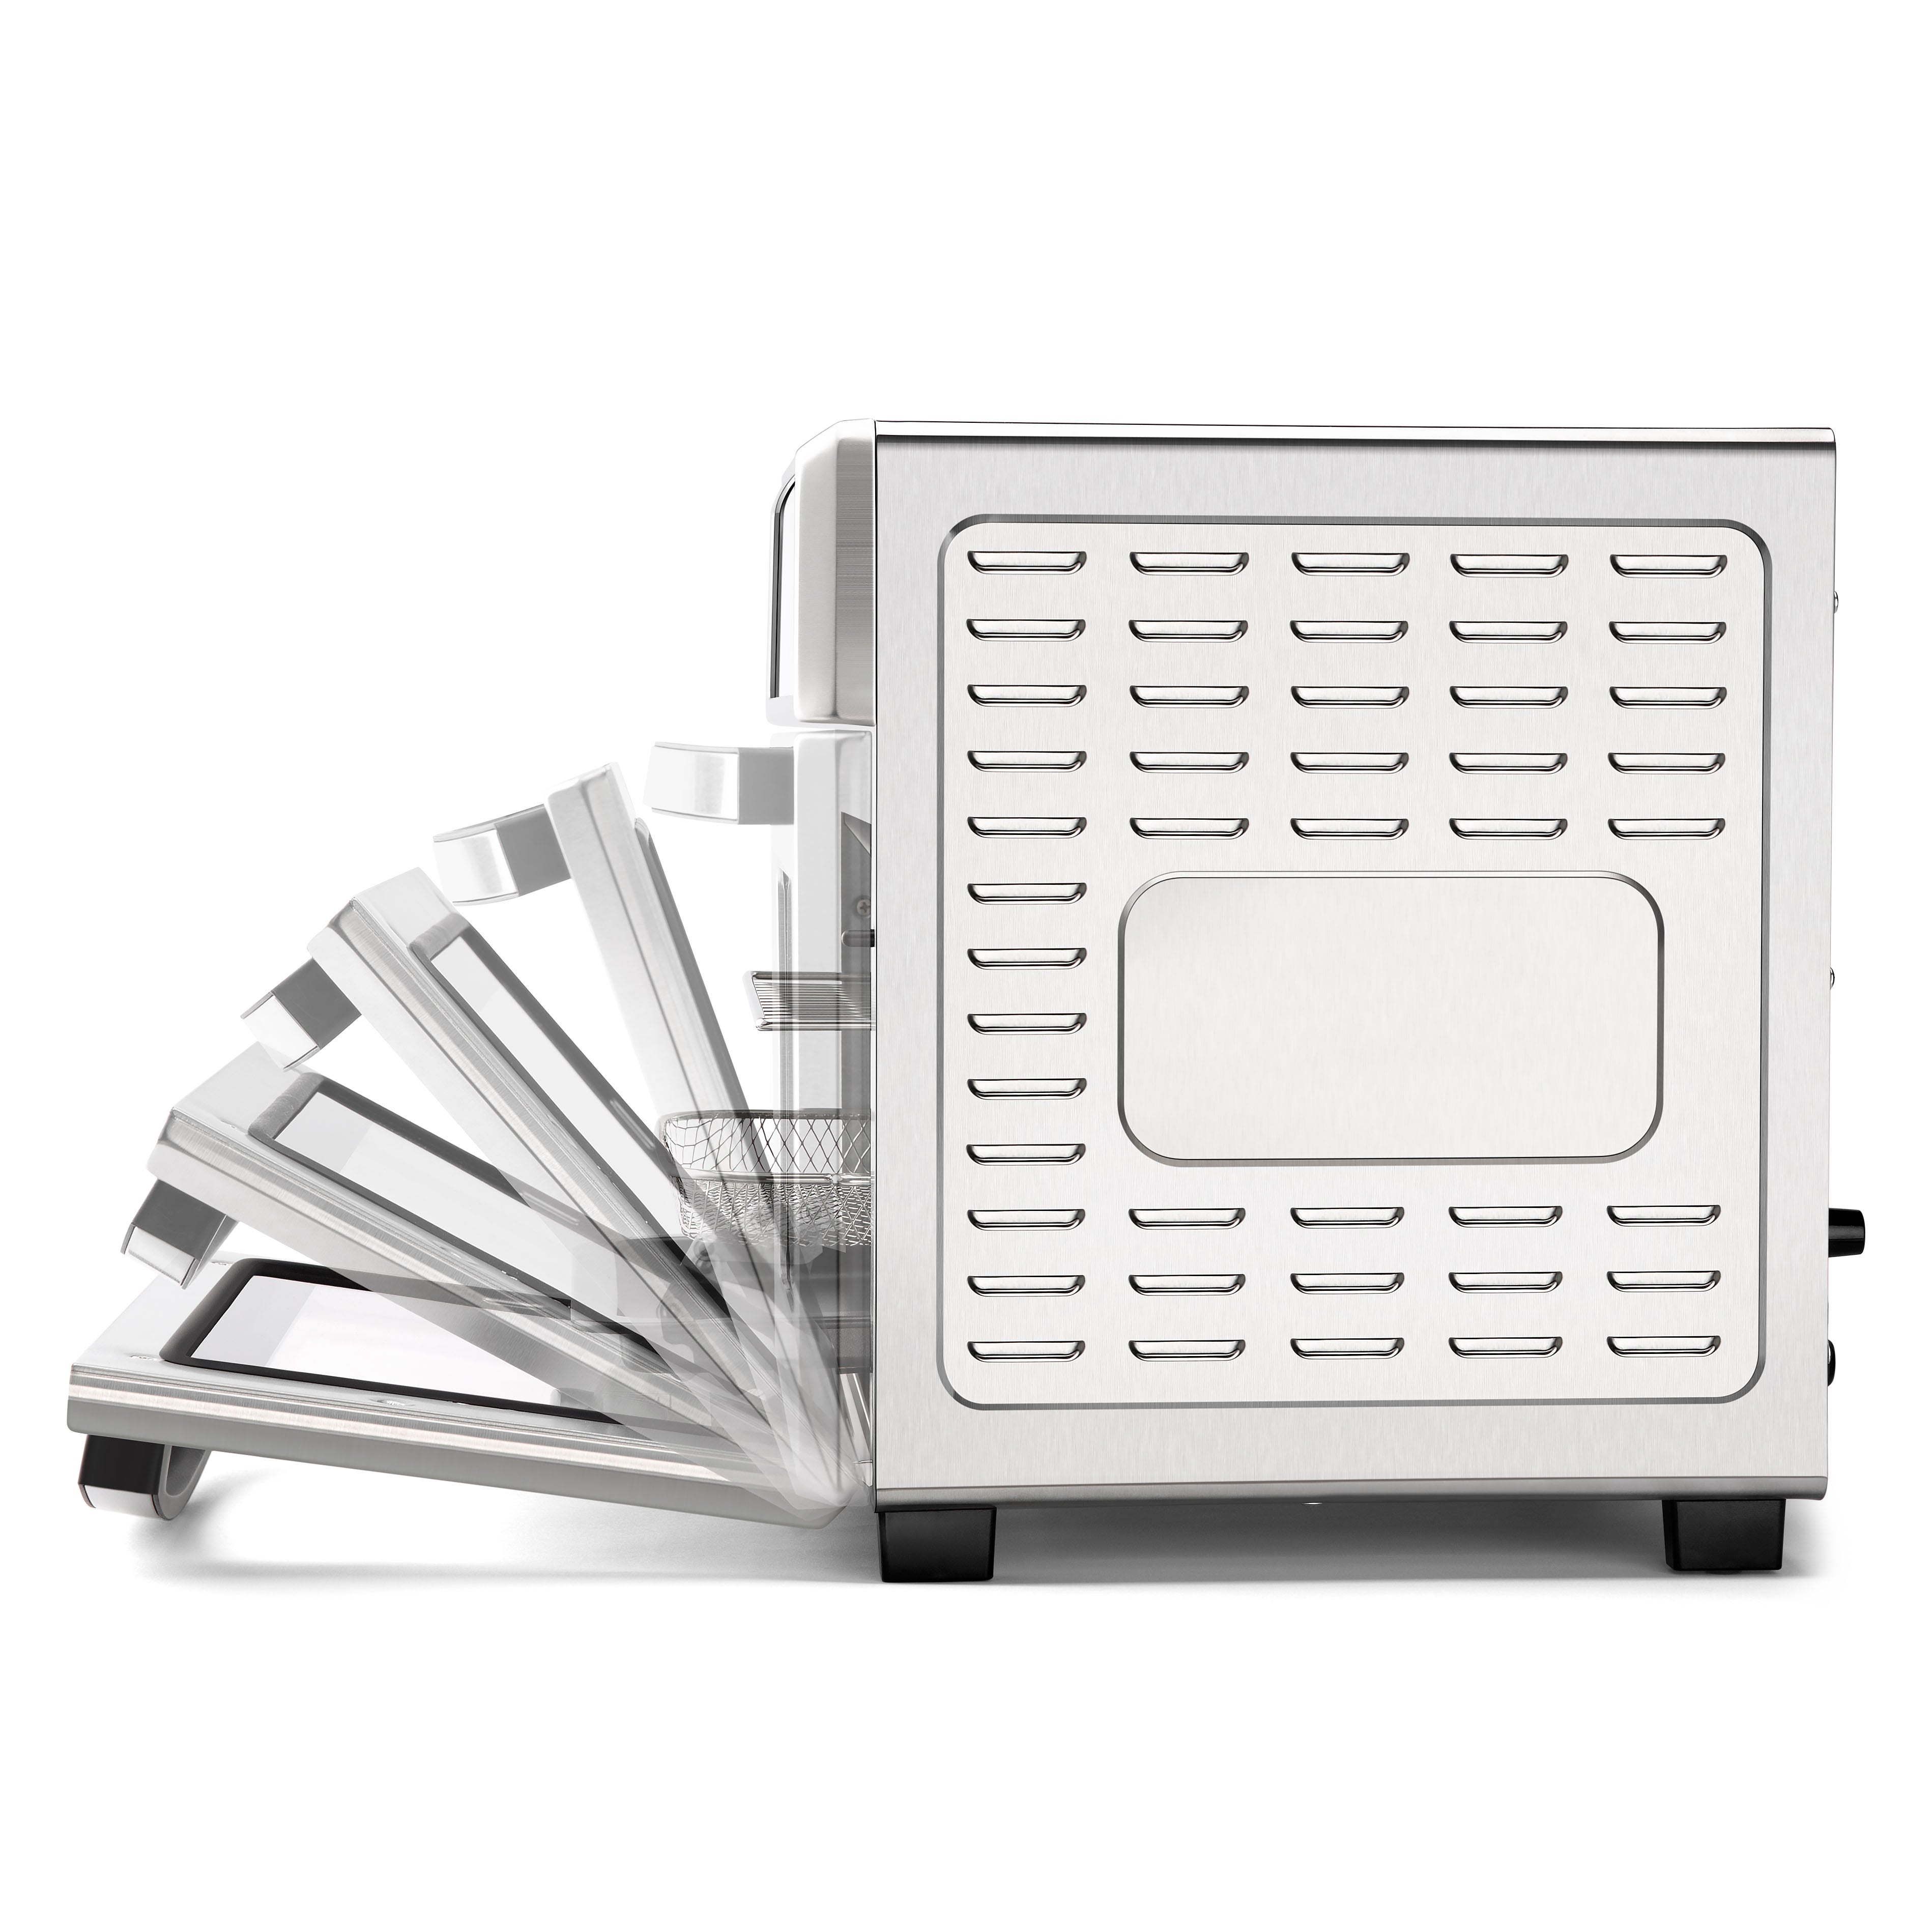 VENTRAY Convection Countertop Toaster Mini Oven Master, 26QT